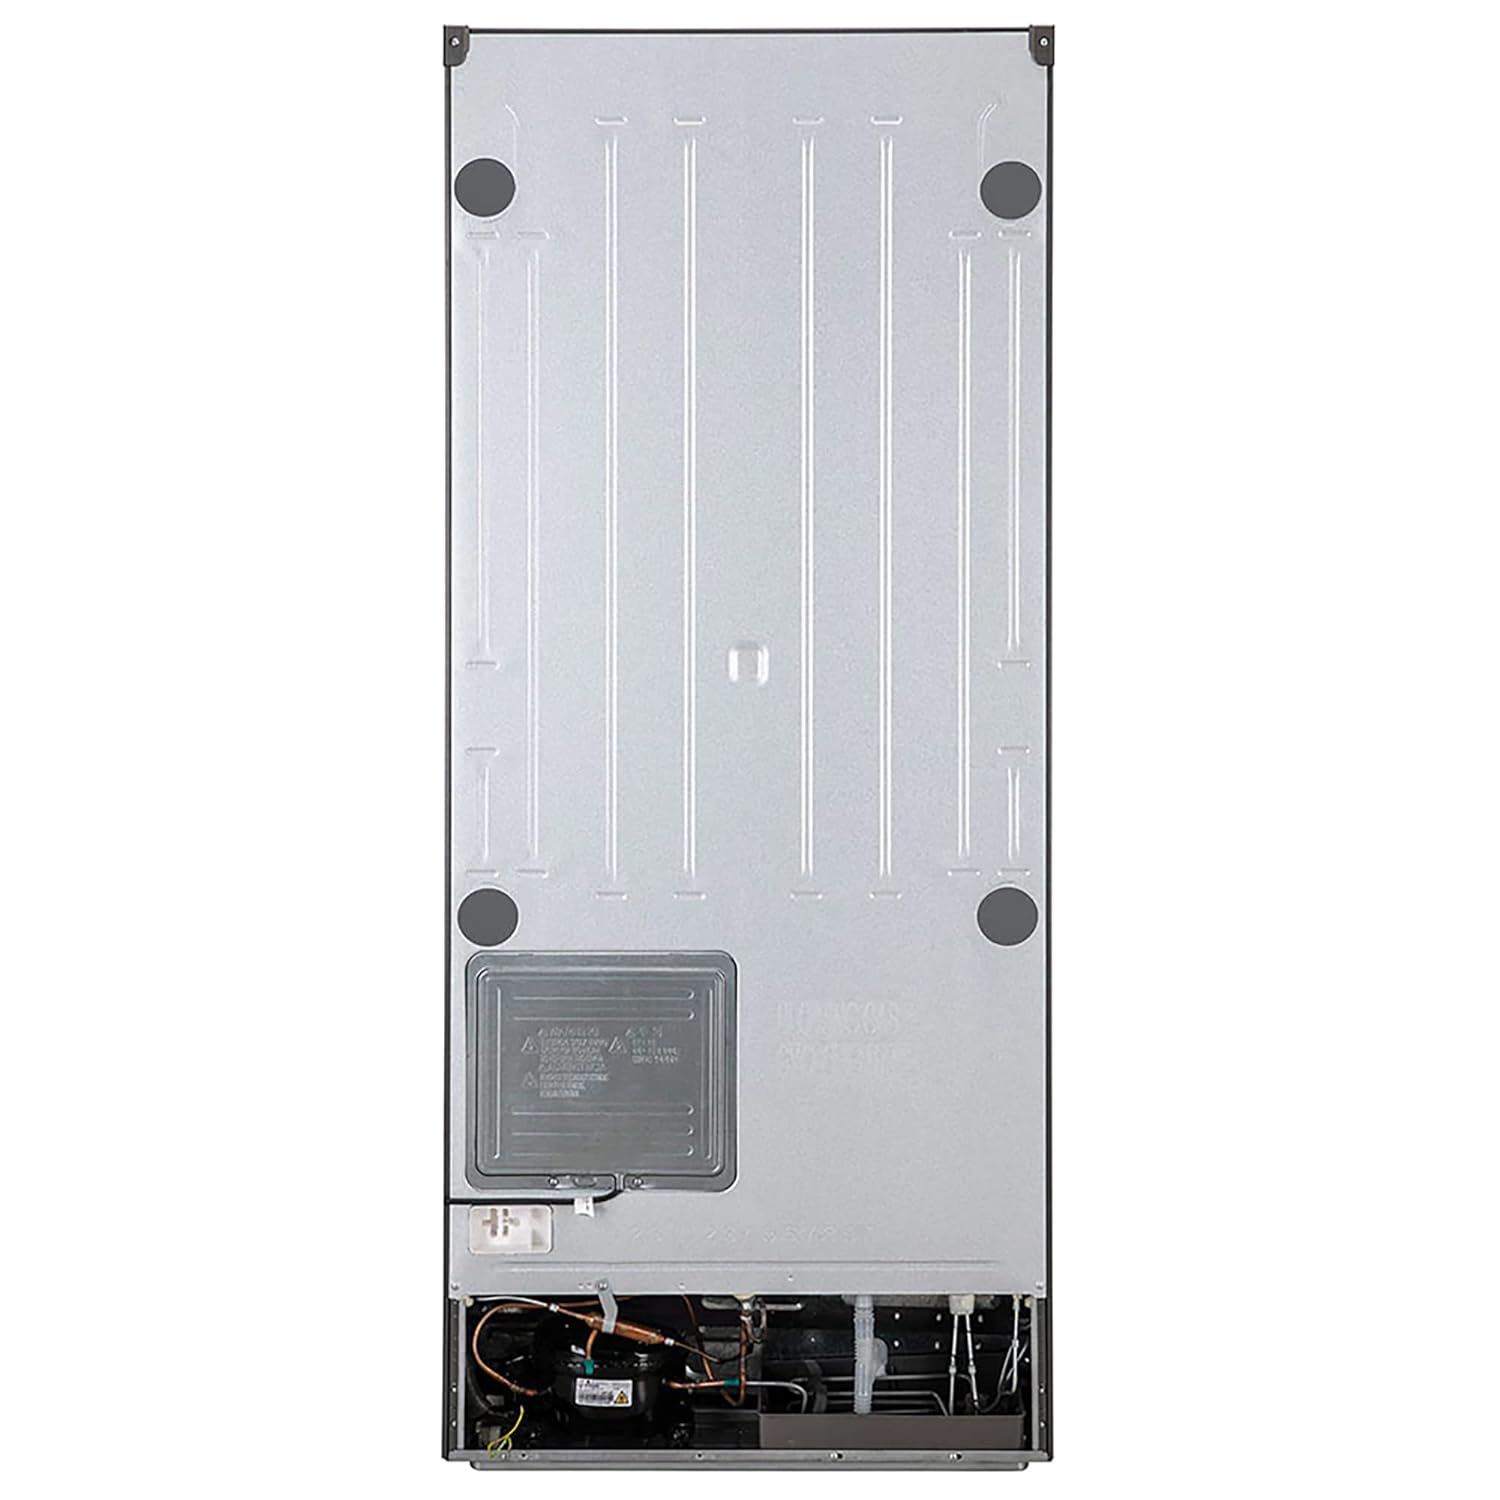 LG GL-S412SPZY 380 L 2 Star Frost-Free Smart Inverter Double Door Refrigerator ( Shiny Steel, Convertible) Mahajan Electronics Online